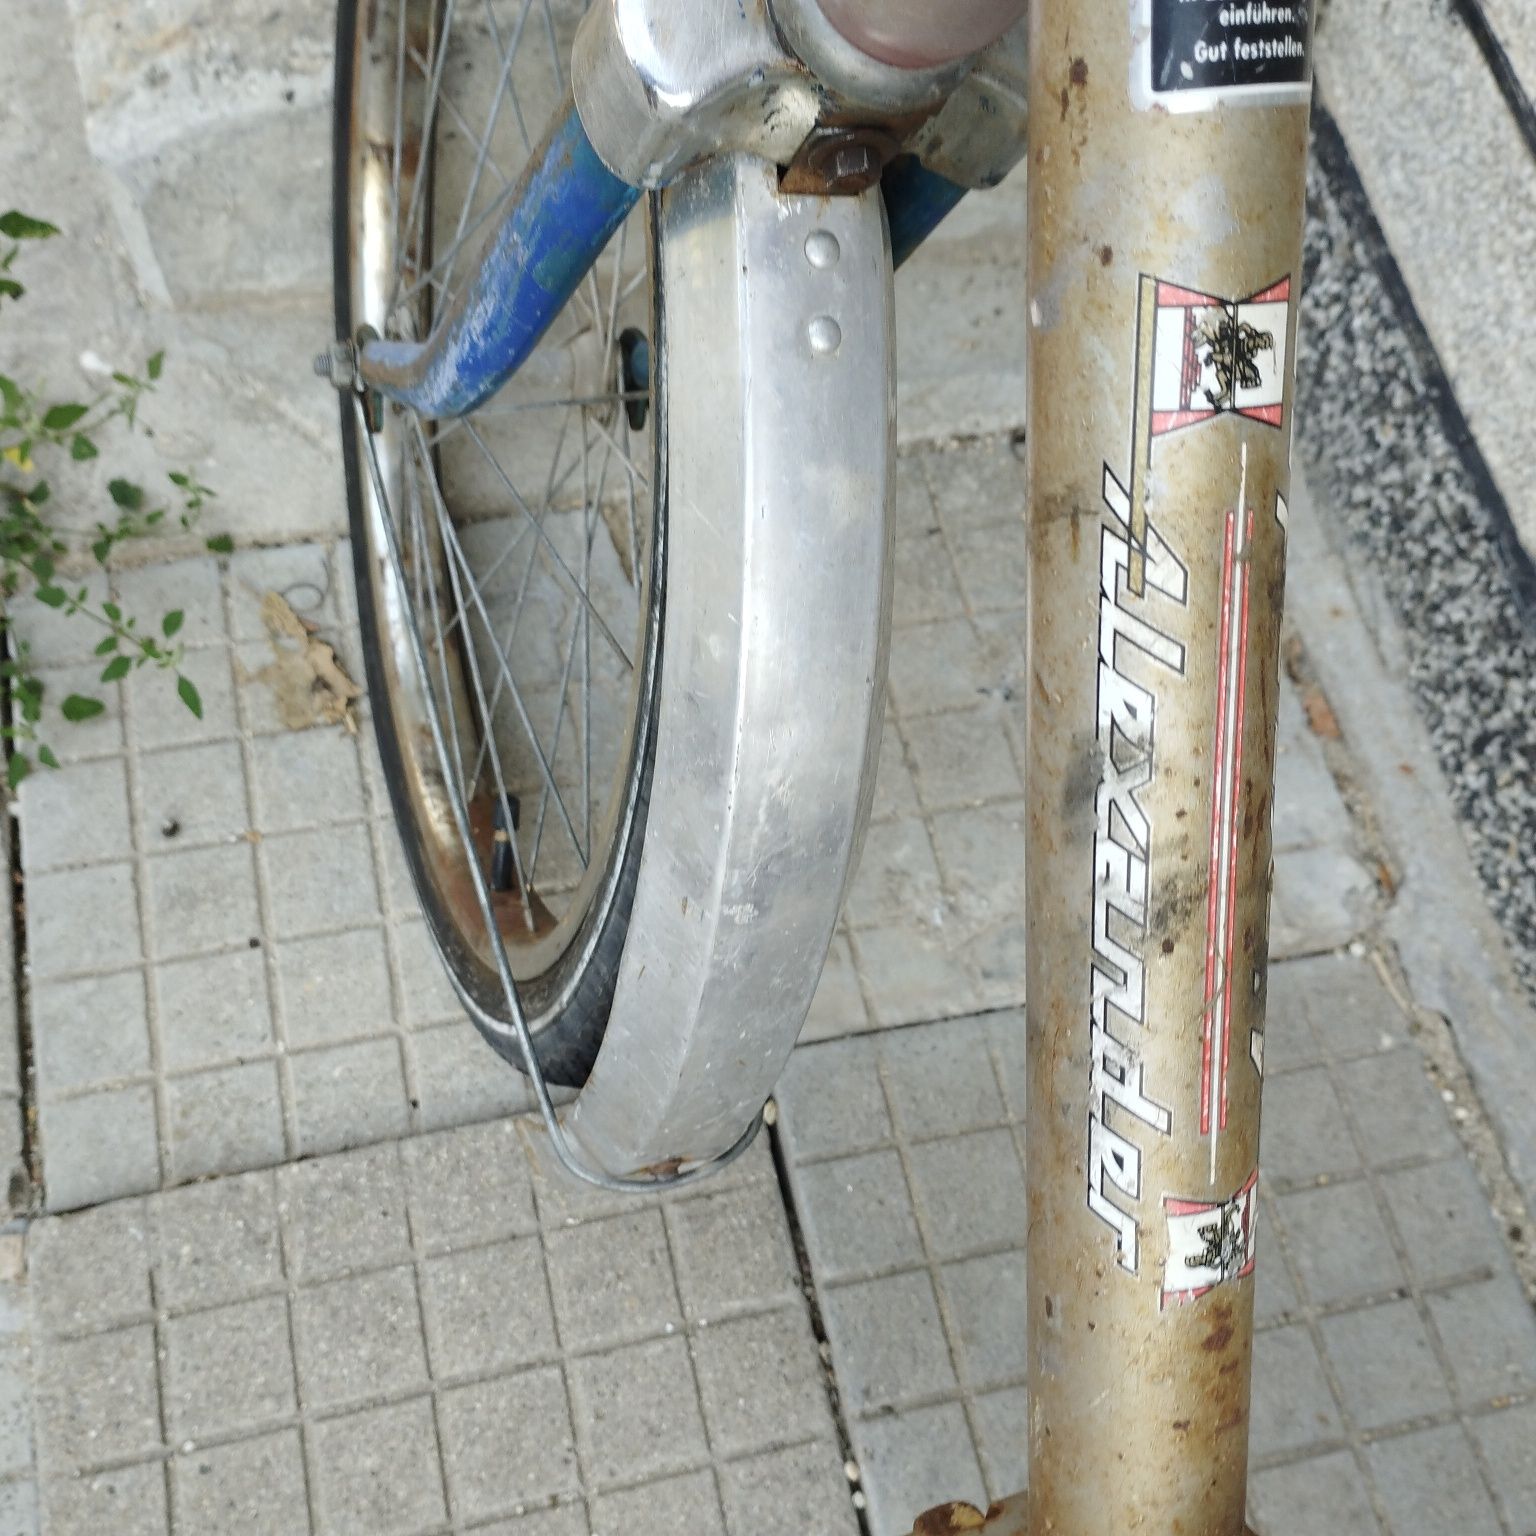 Велосипед"Александър"